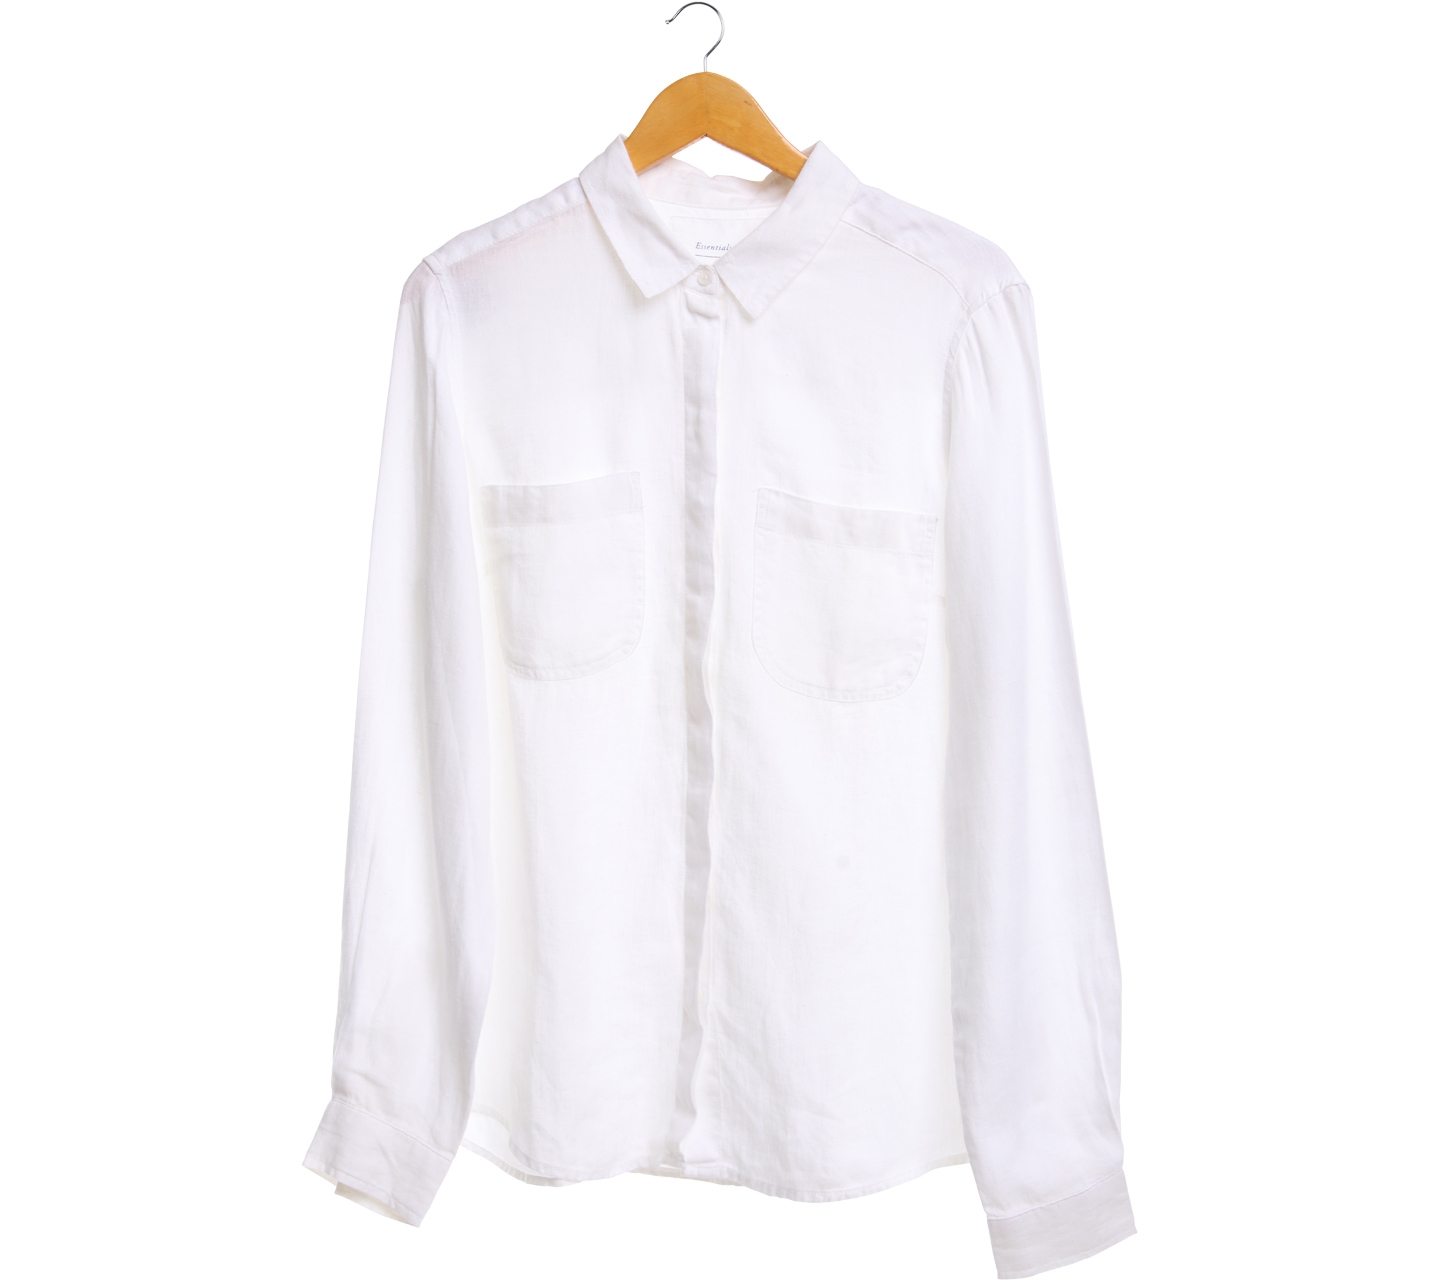 Essentials White Shirt